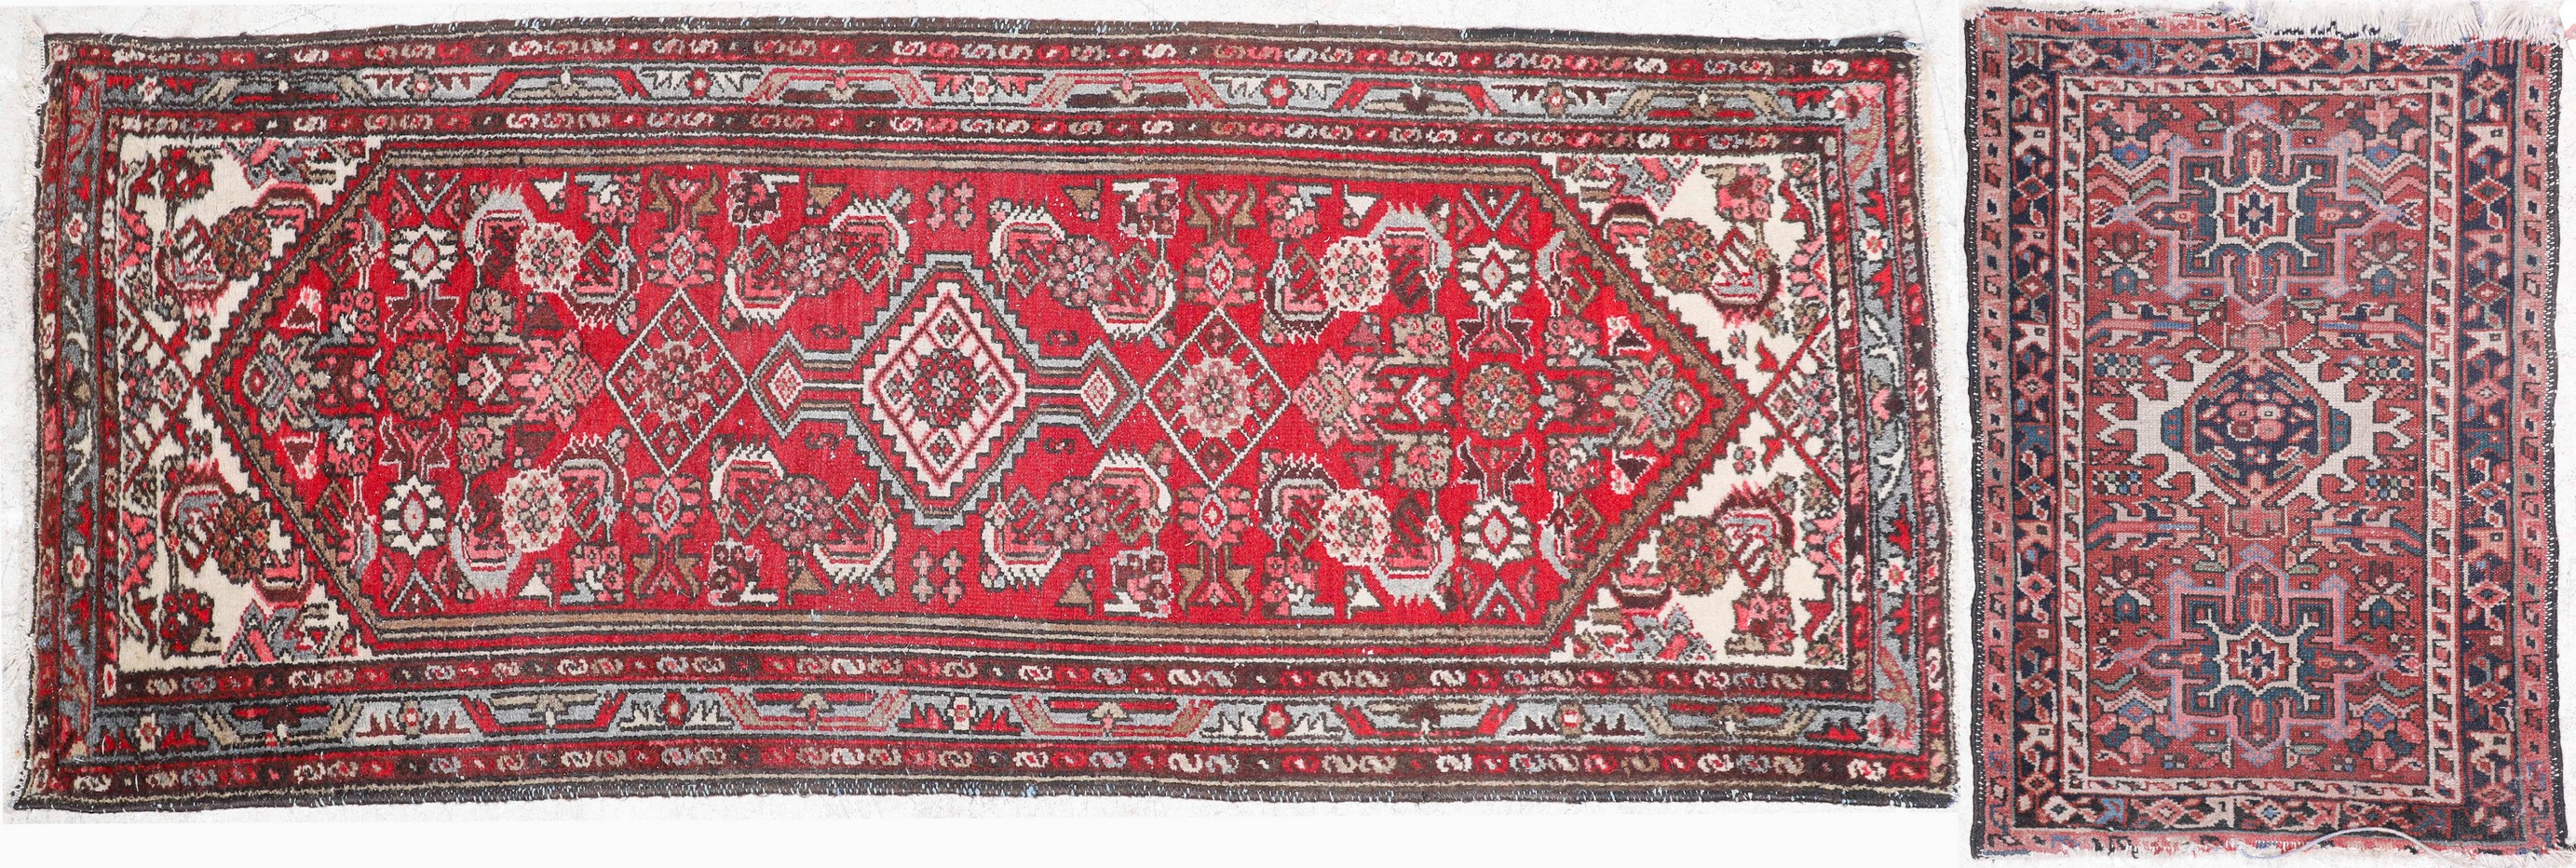 (2) Persian Throw rugs, 2'4" X